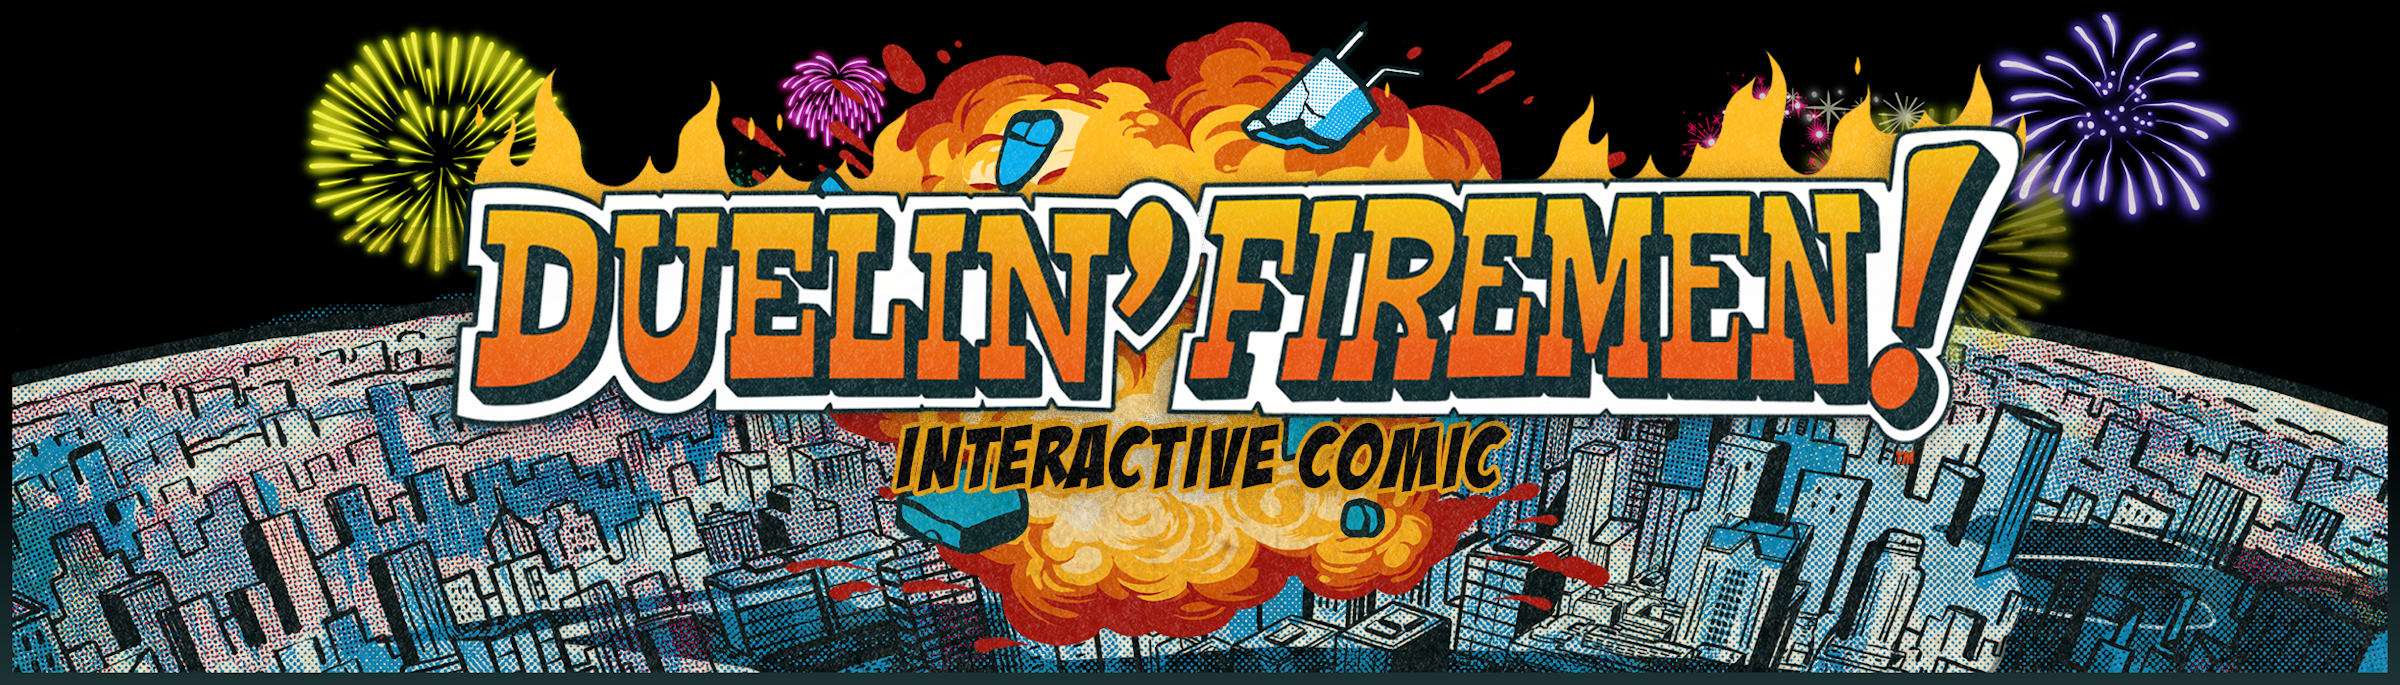 DUELIN' FIREMEN! INTERACTIVE COMIC BOOK